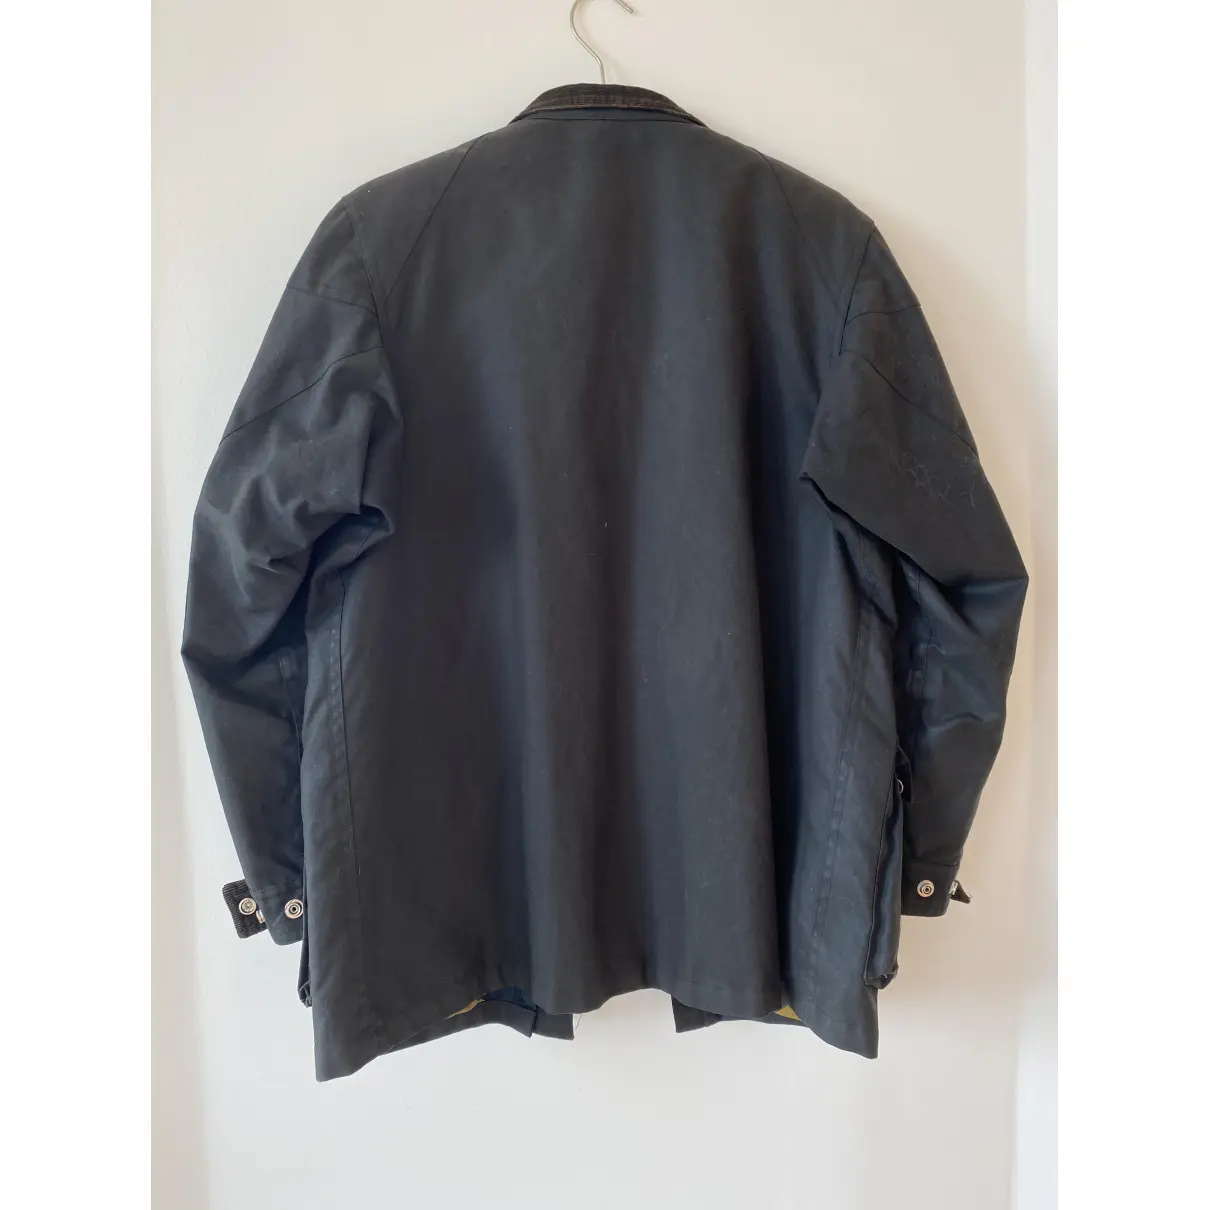 Buy Paul Smith Black Cotton Coat online